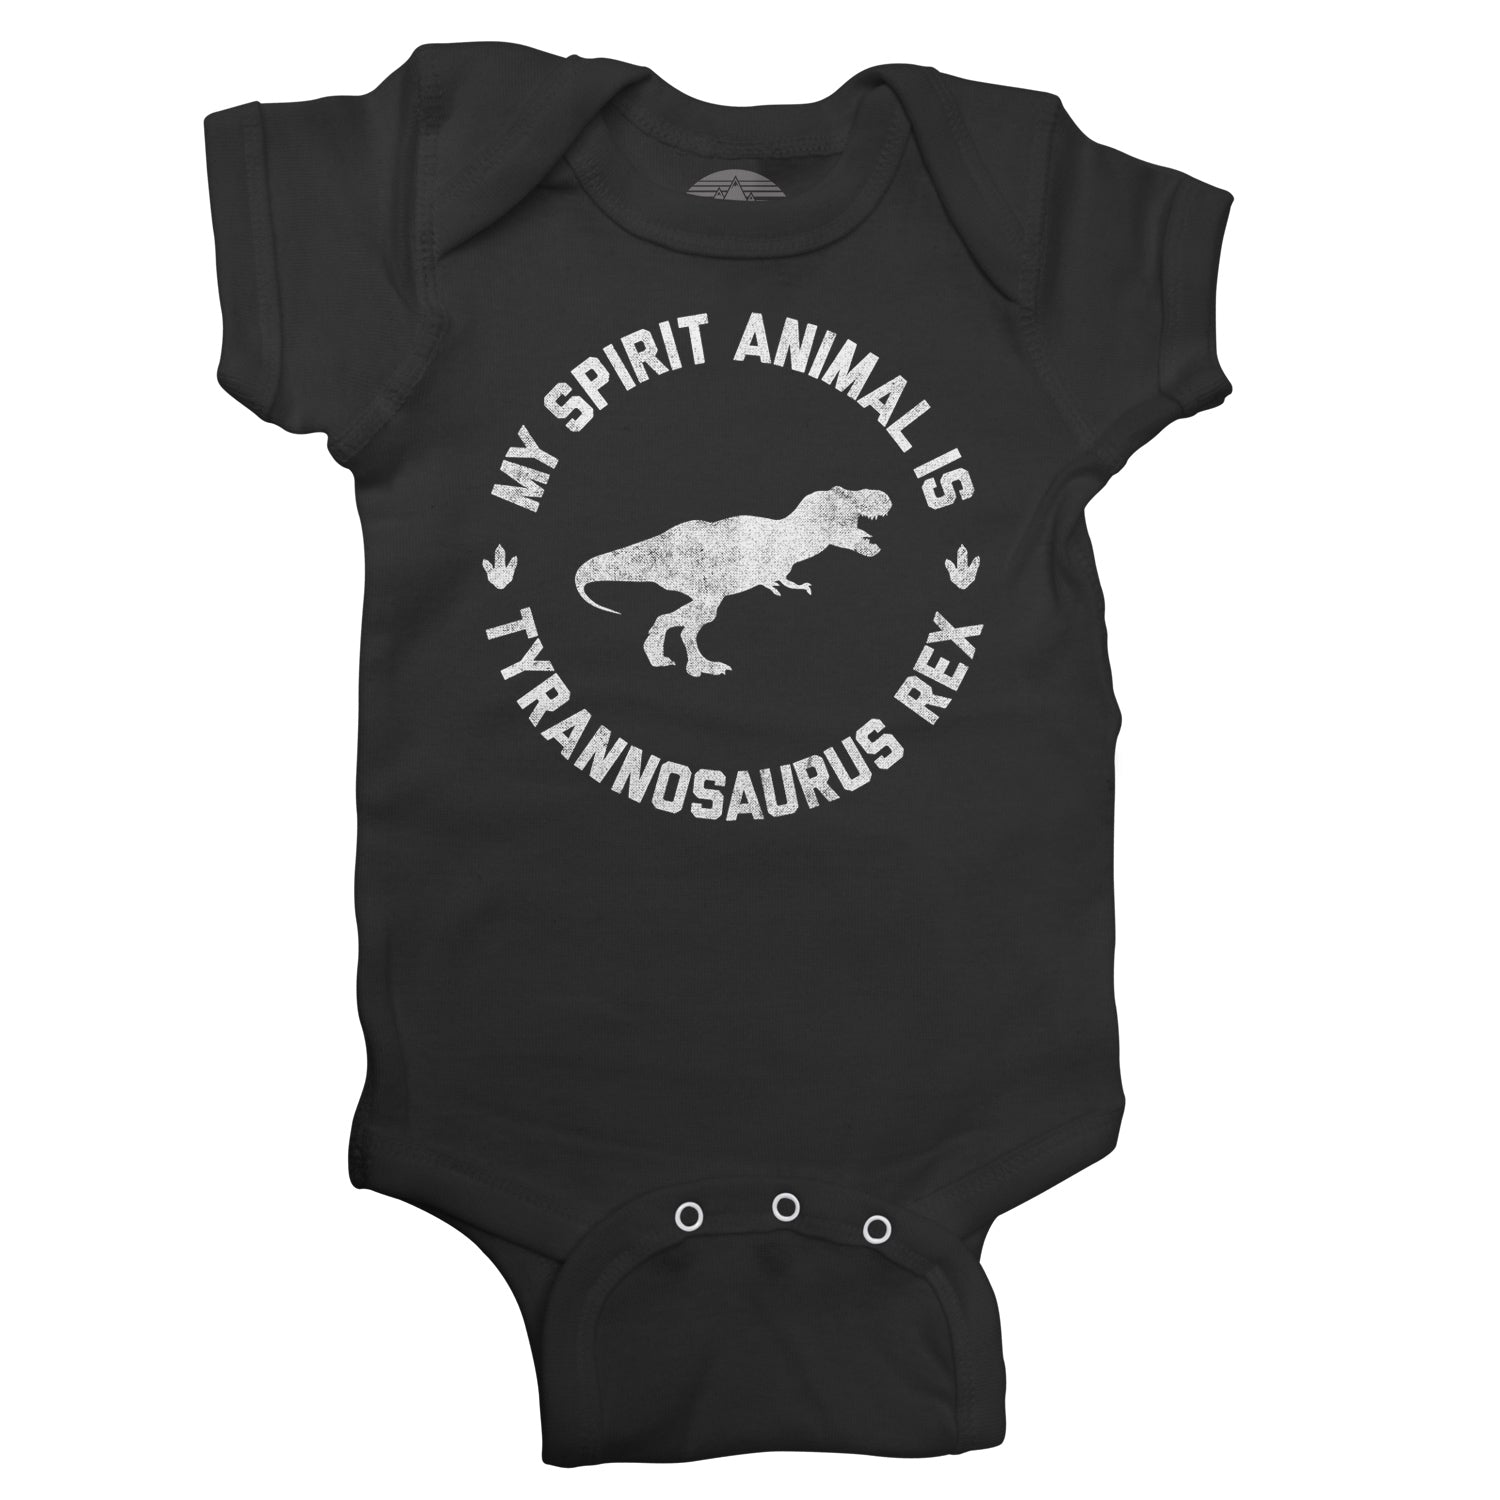 My Spirit Animal is T-Rex Infant Bodysuit - Unisex Fit